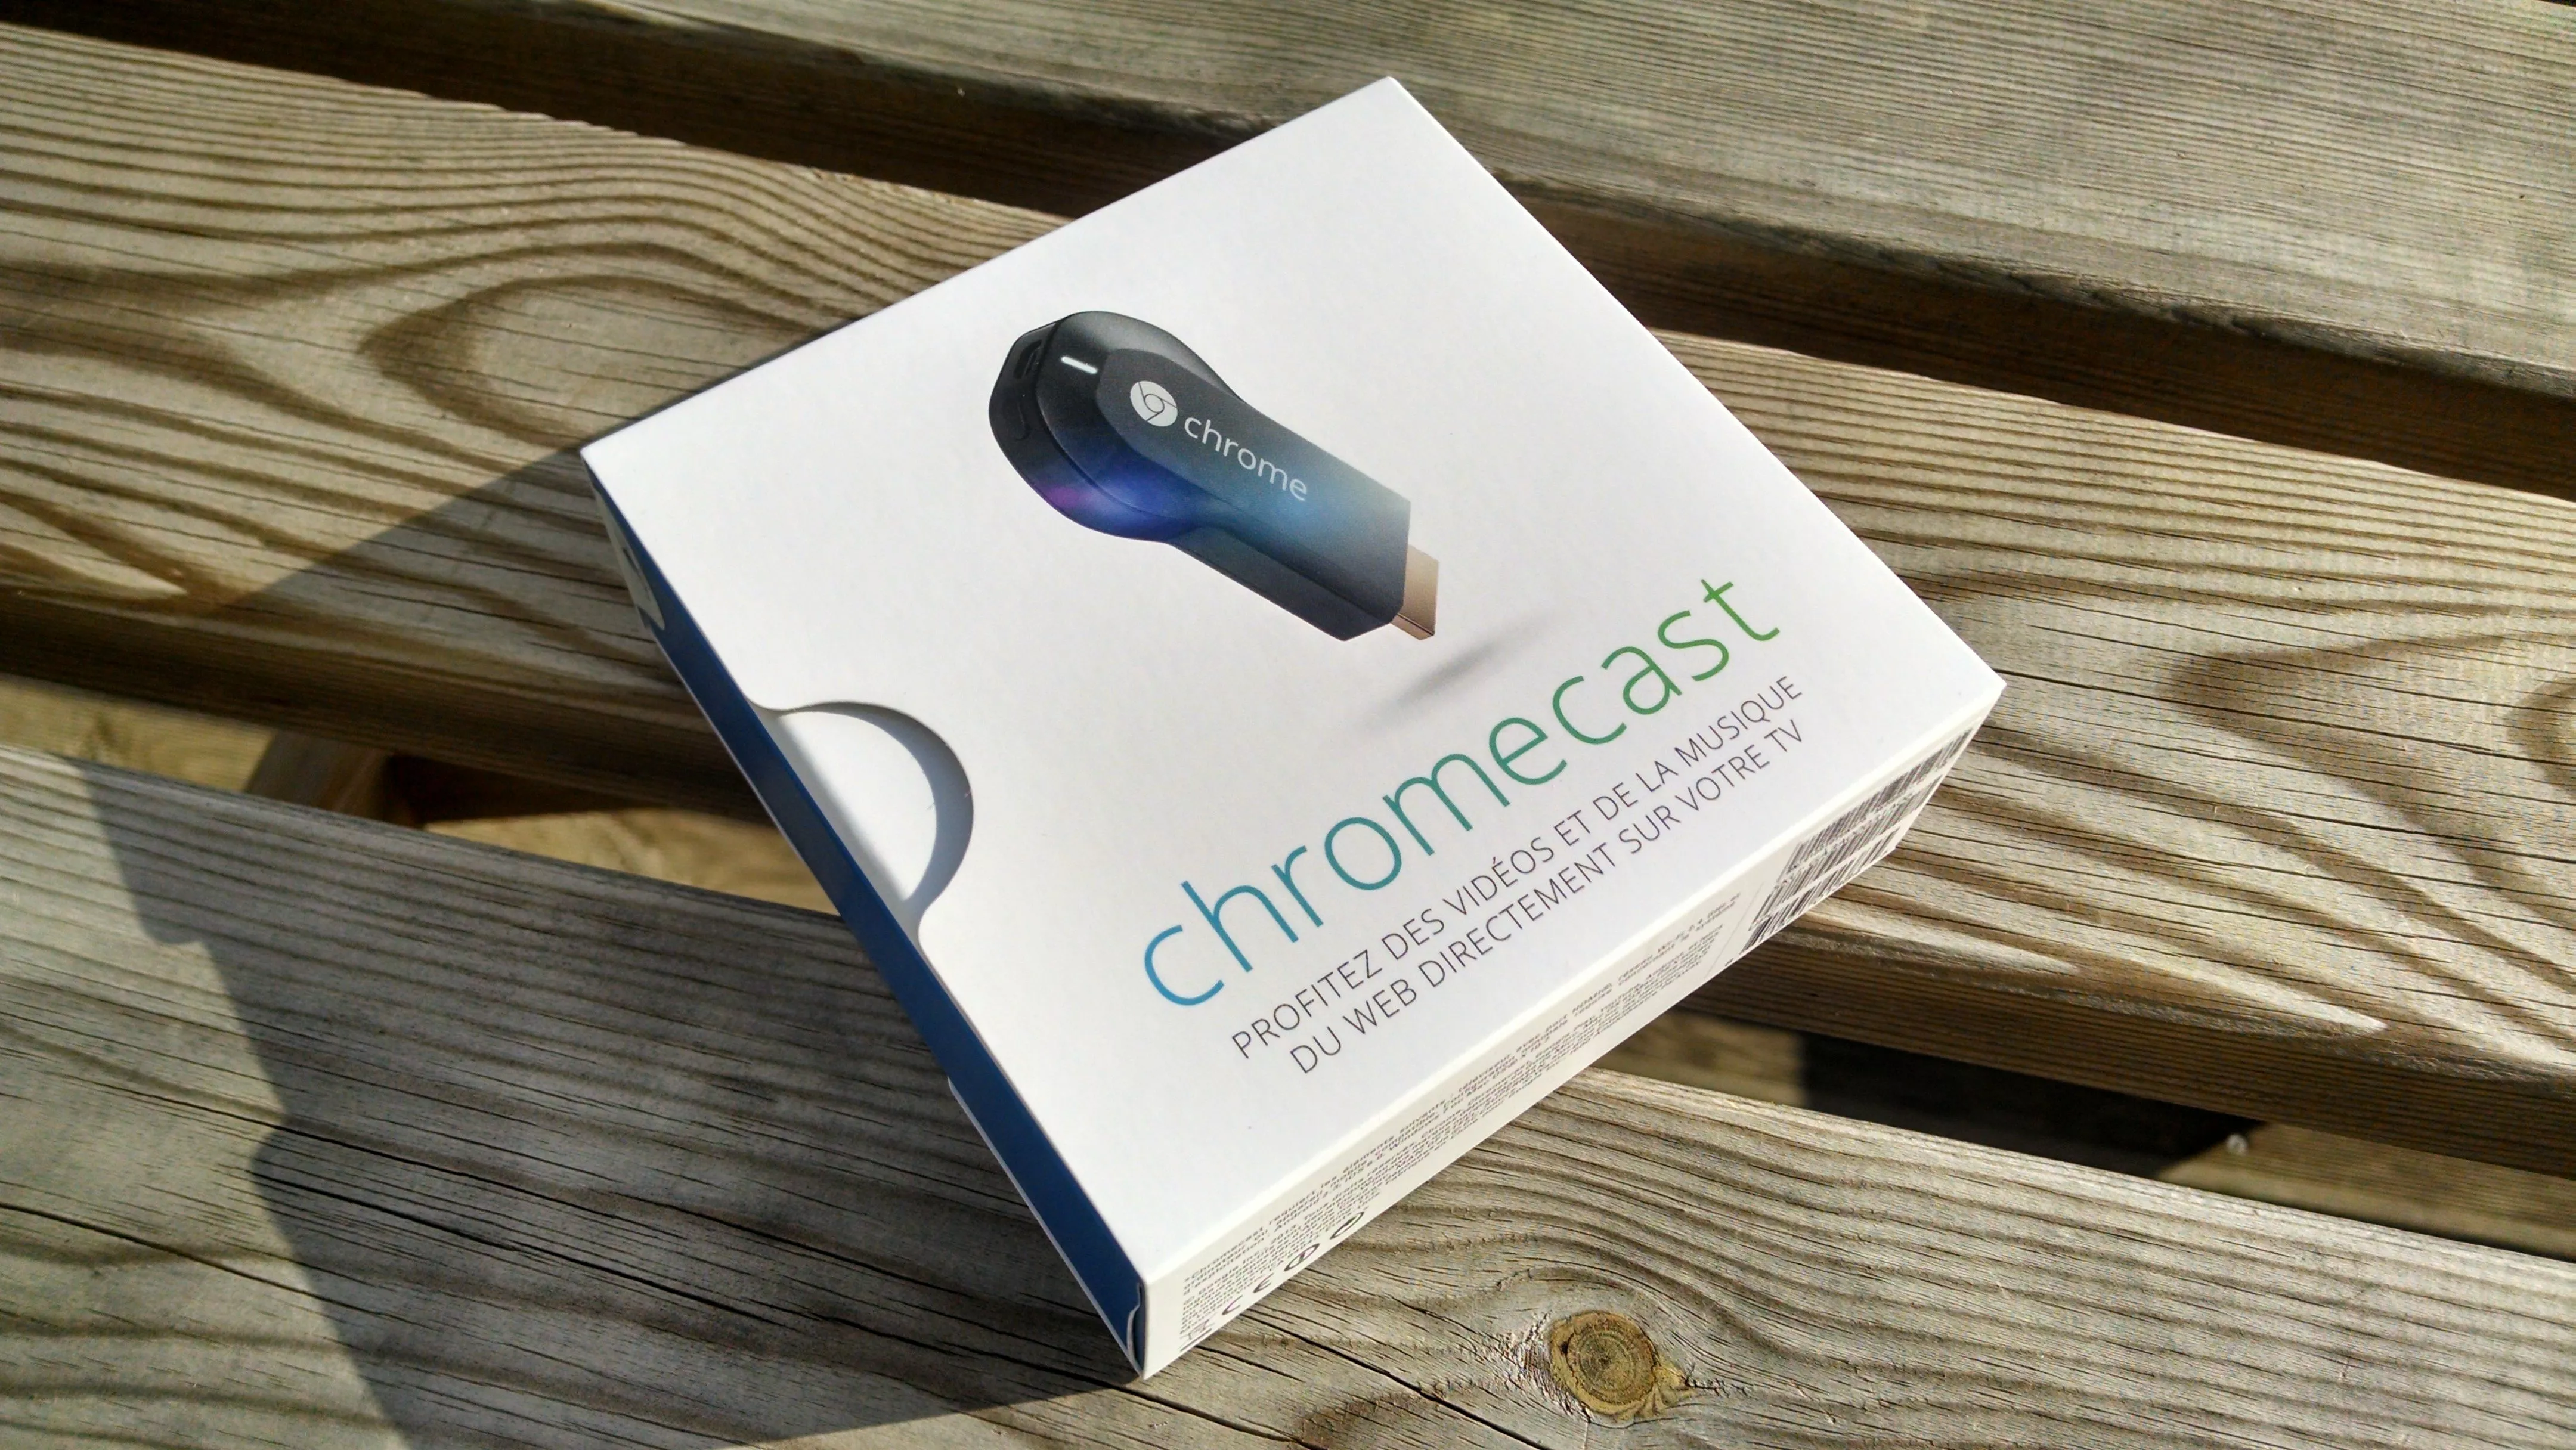 Google_Chromecast_1